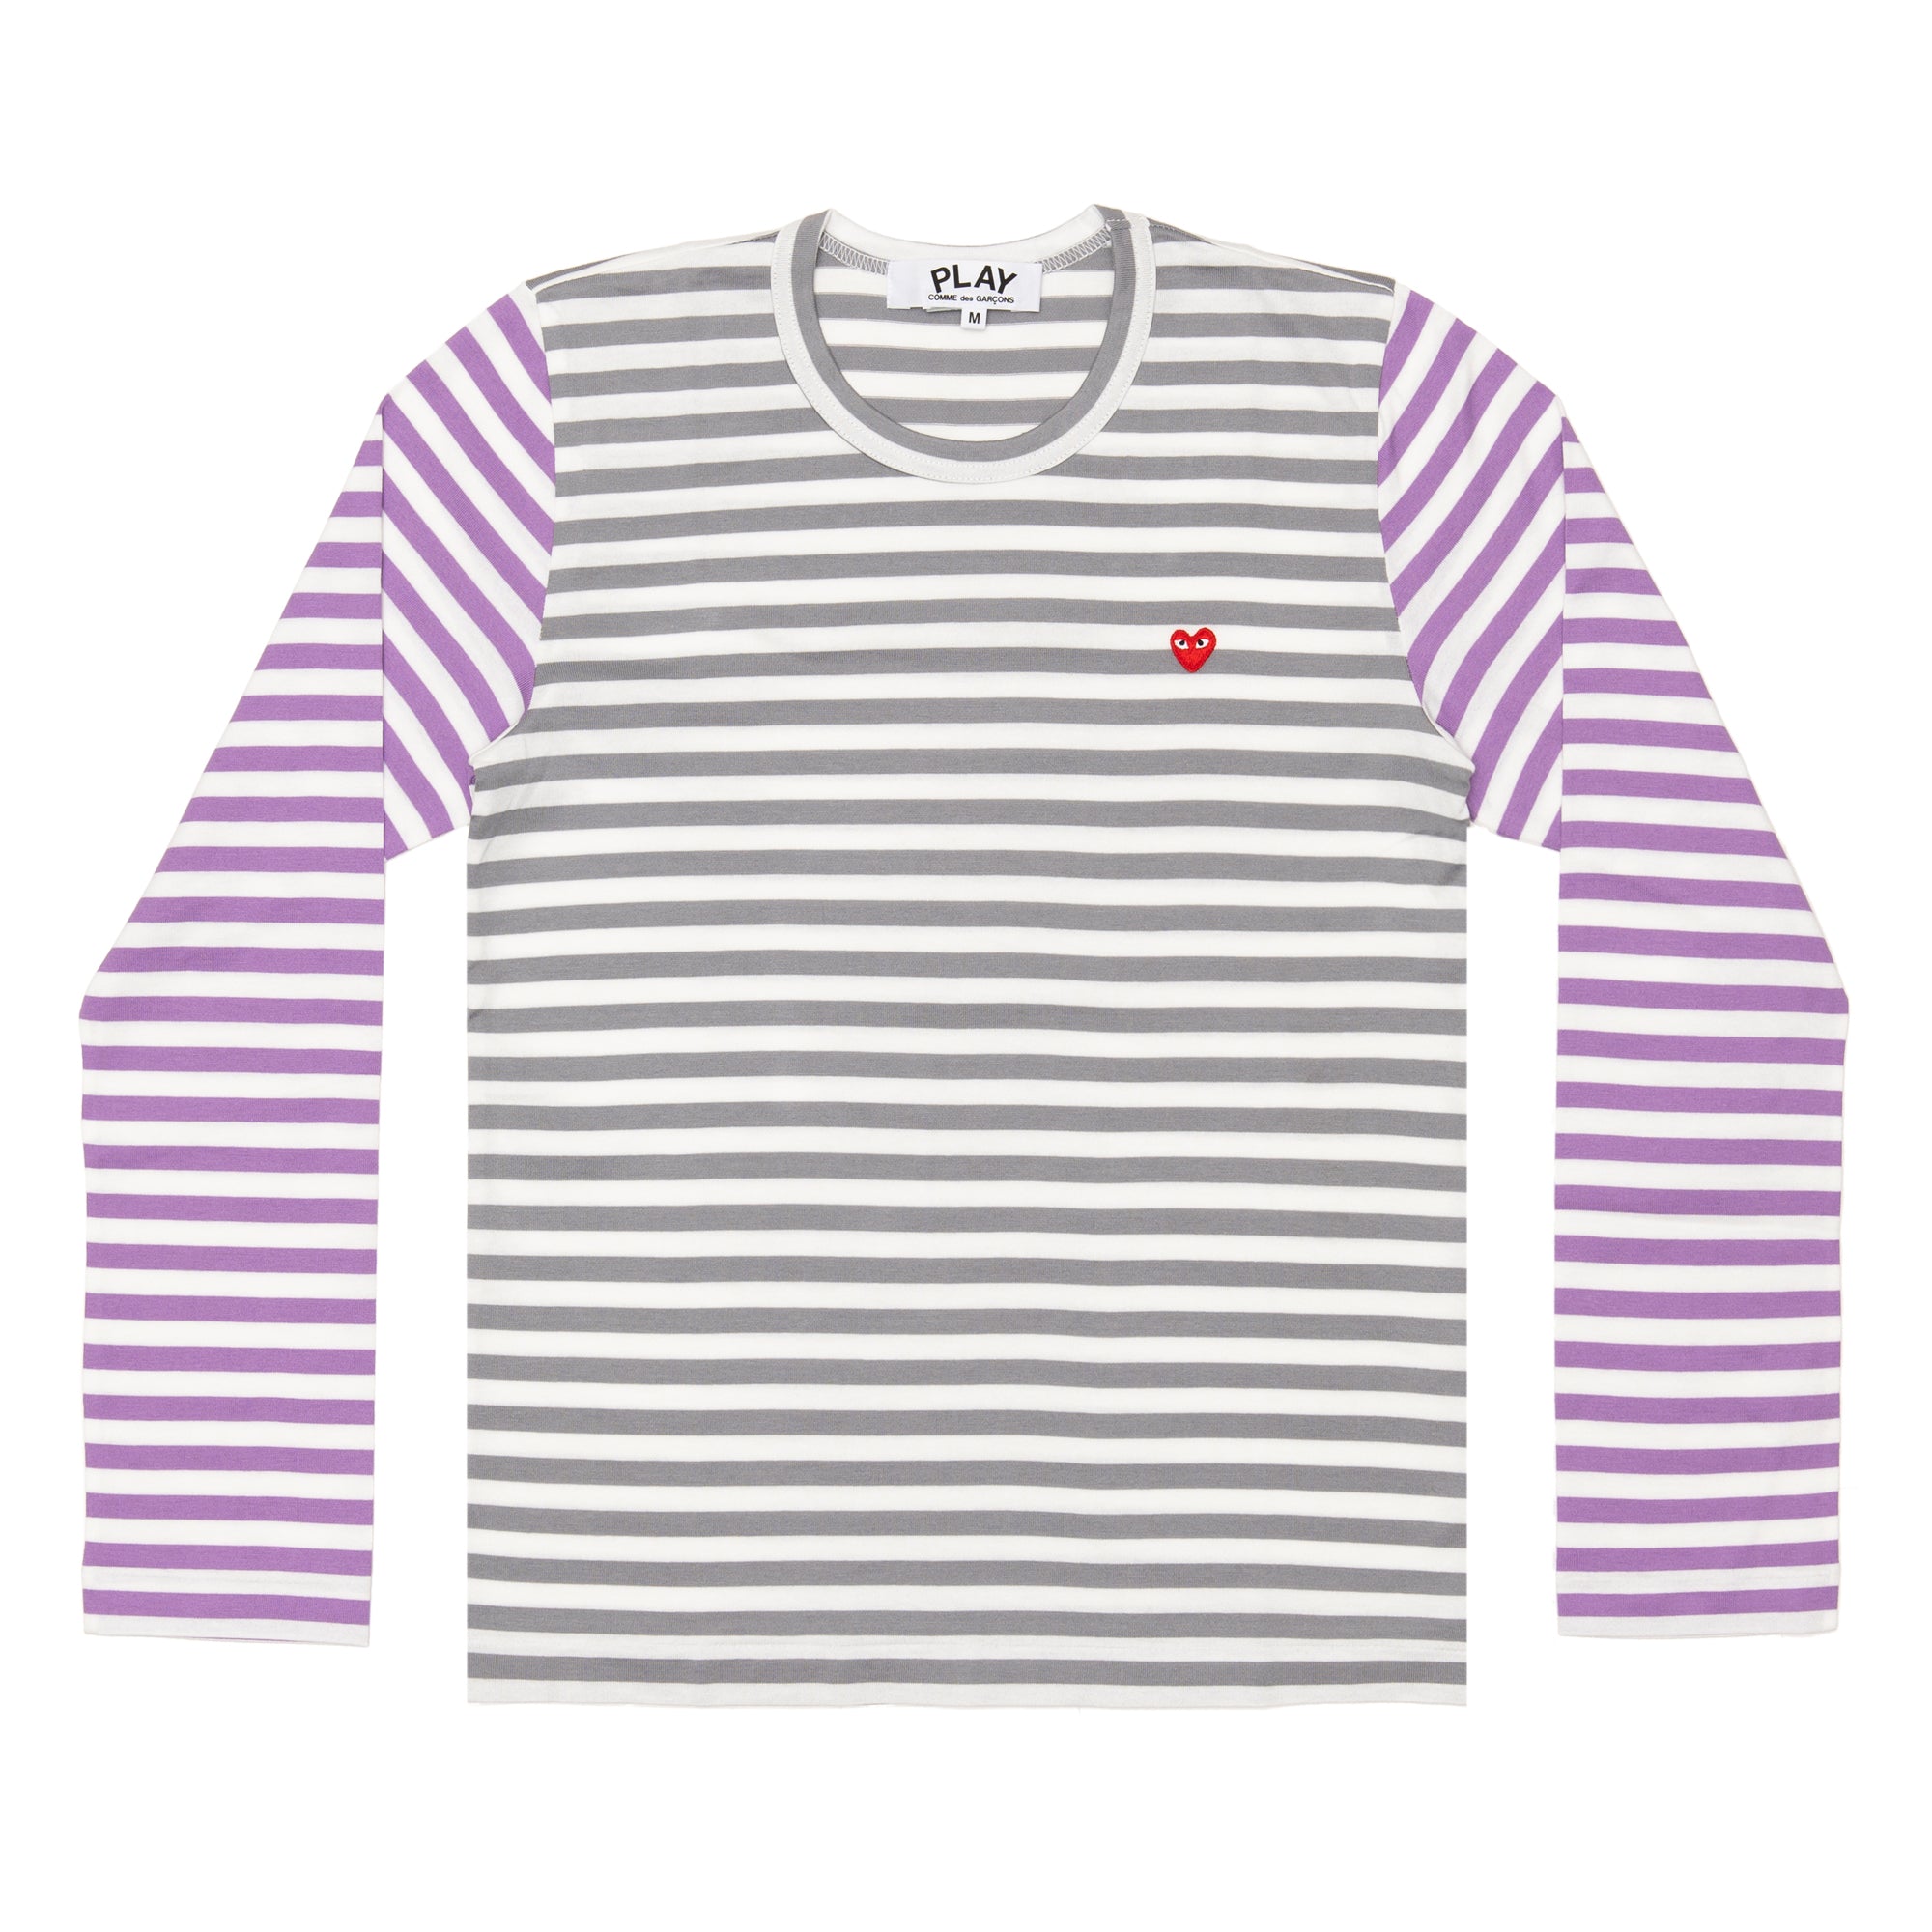 PLAY COMME des GARÇONS Small Red Heart Striped L/S T-Shirt (Gray X Purple) Ladies: ¥10,010 Men's: ¥10,780